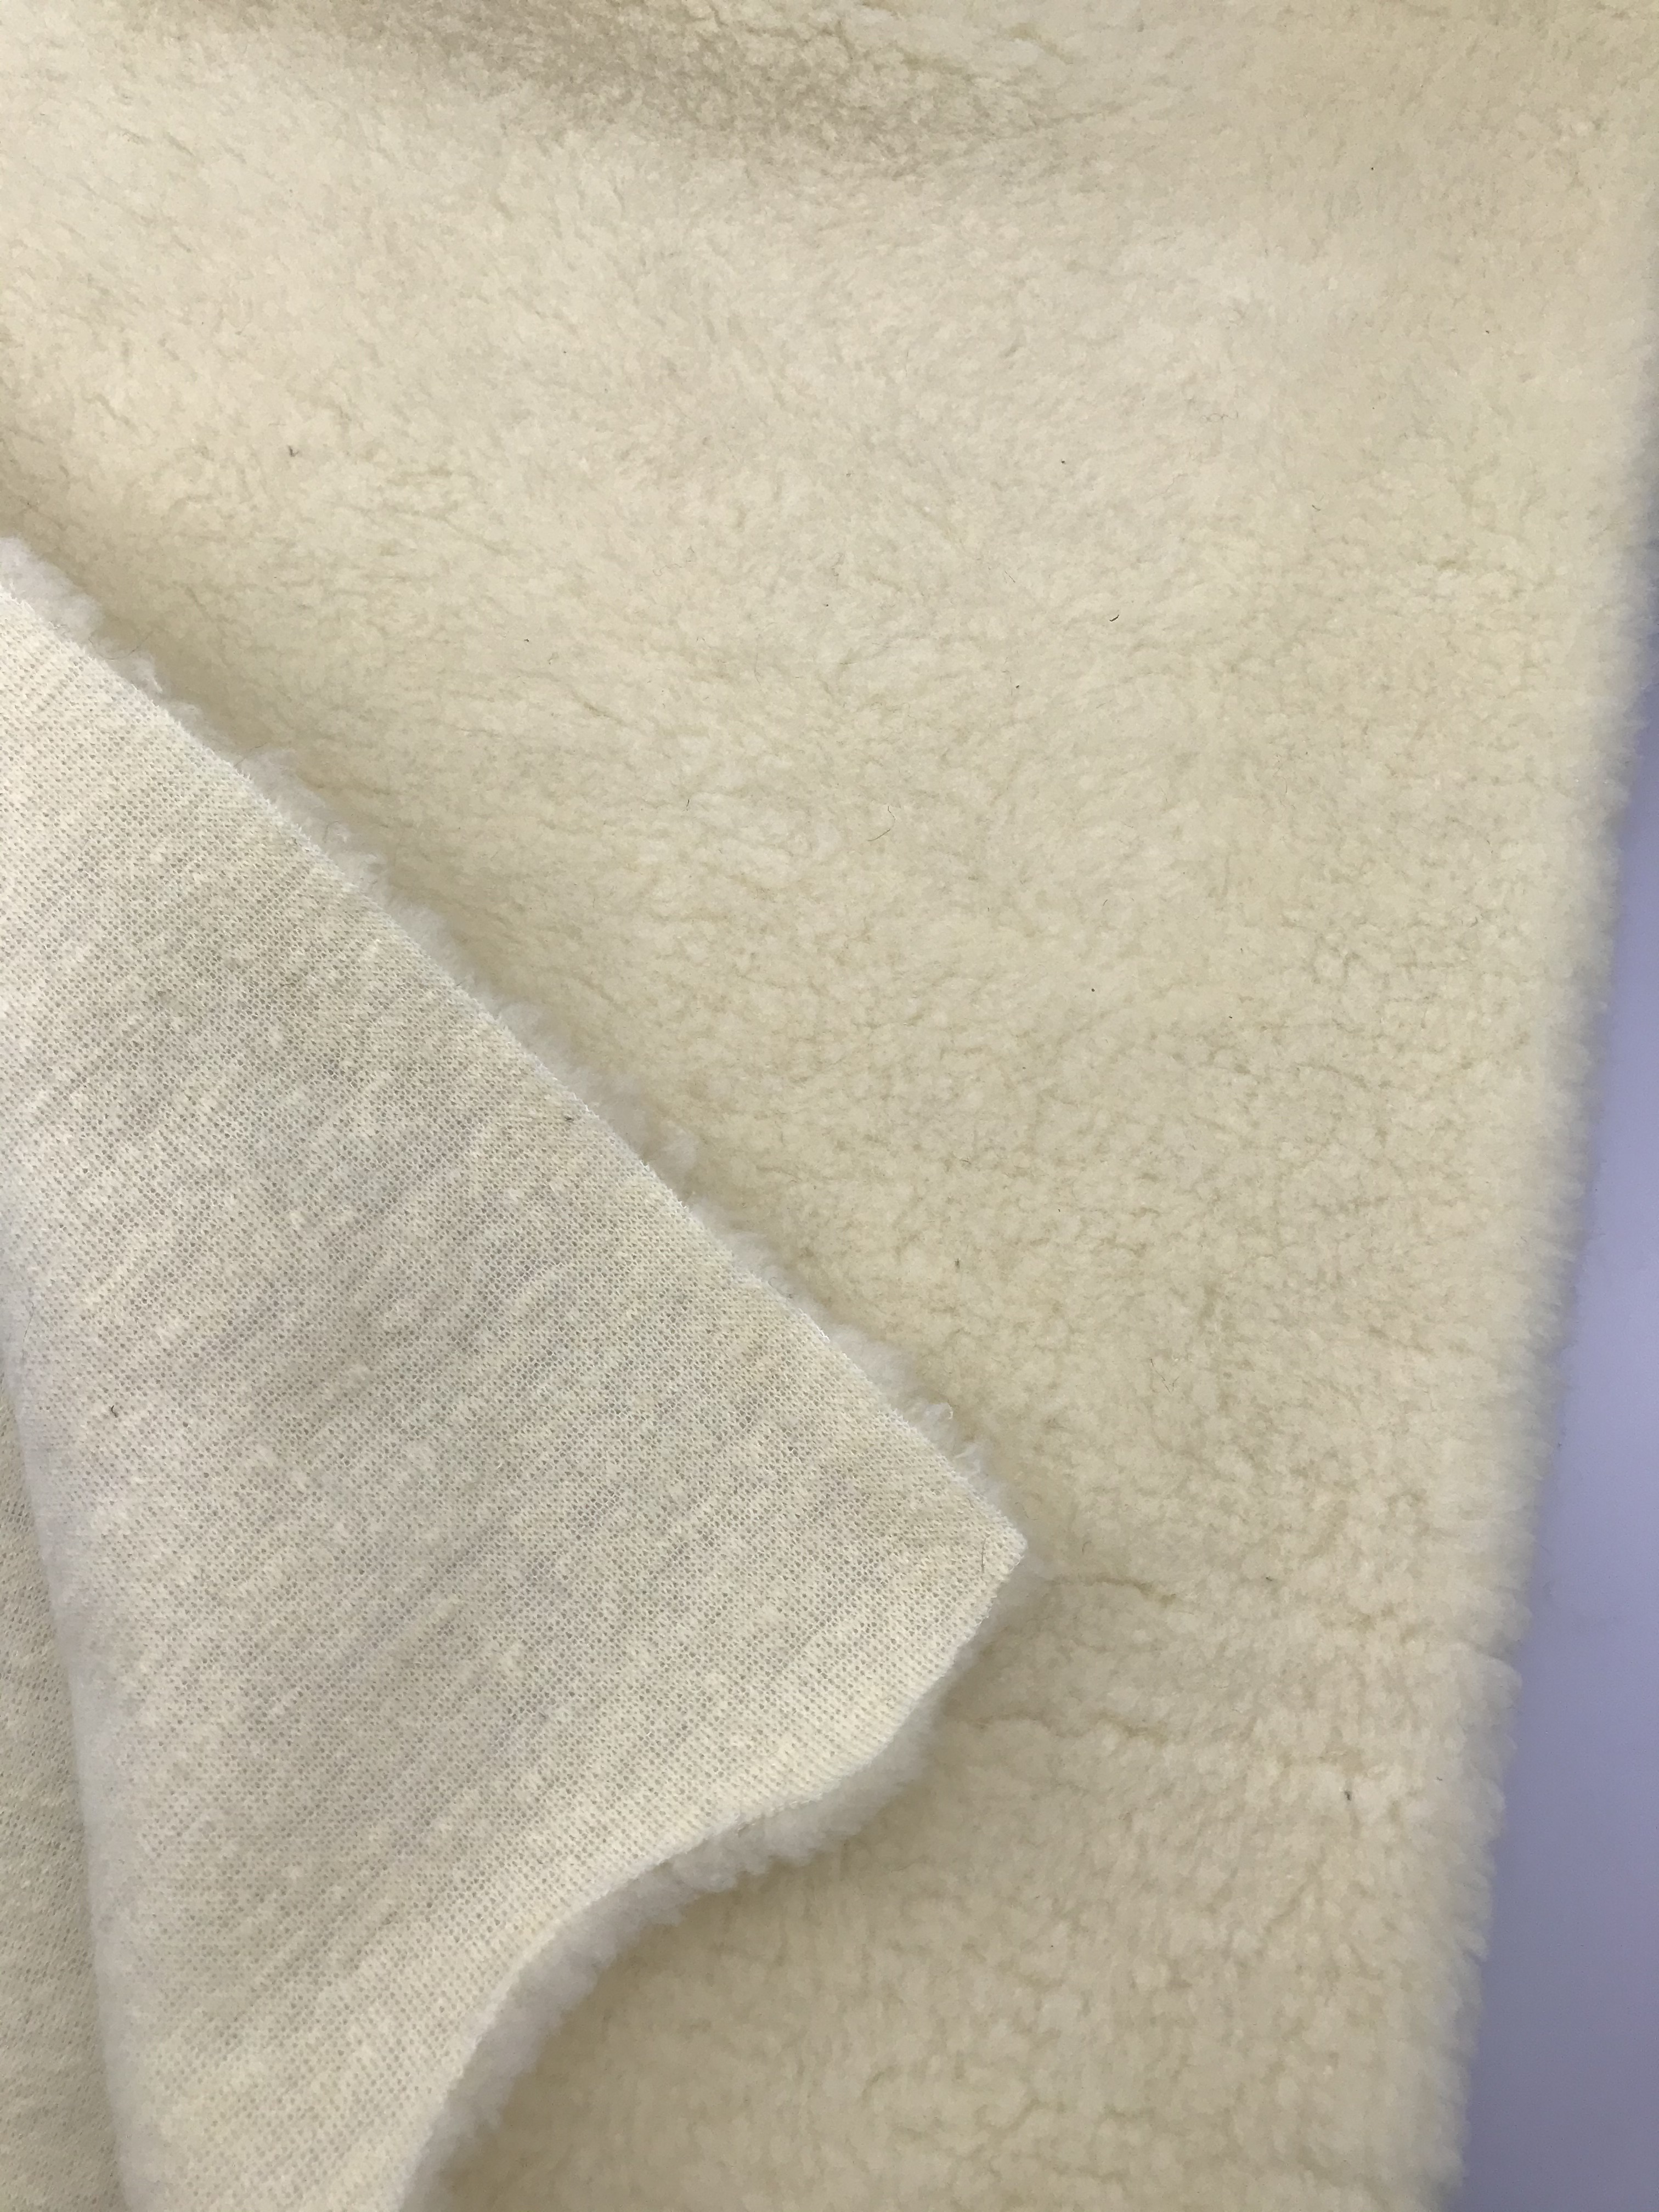 sheep shearling coat fabric